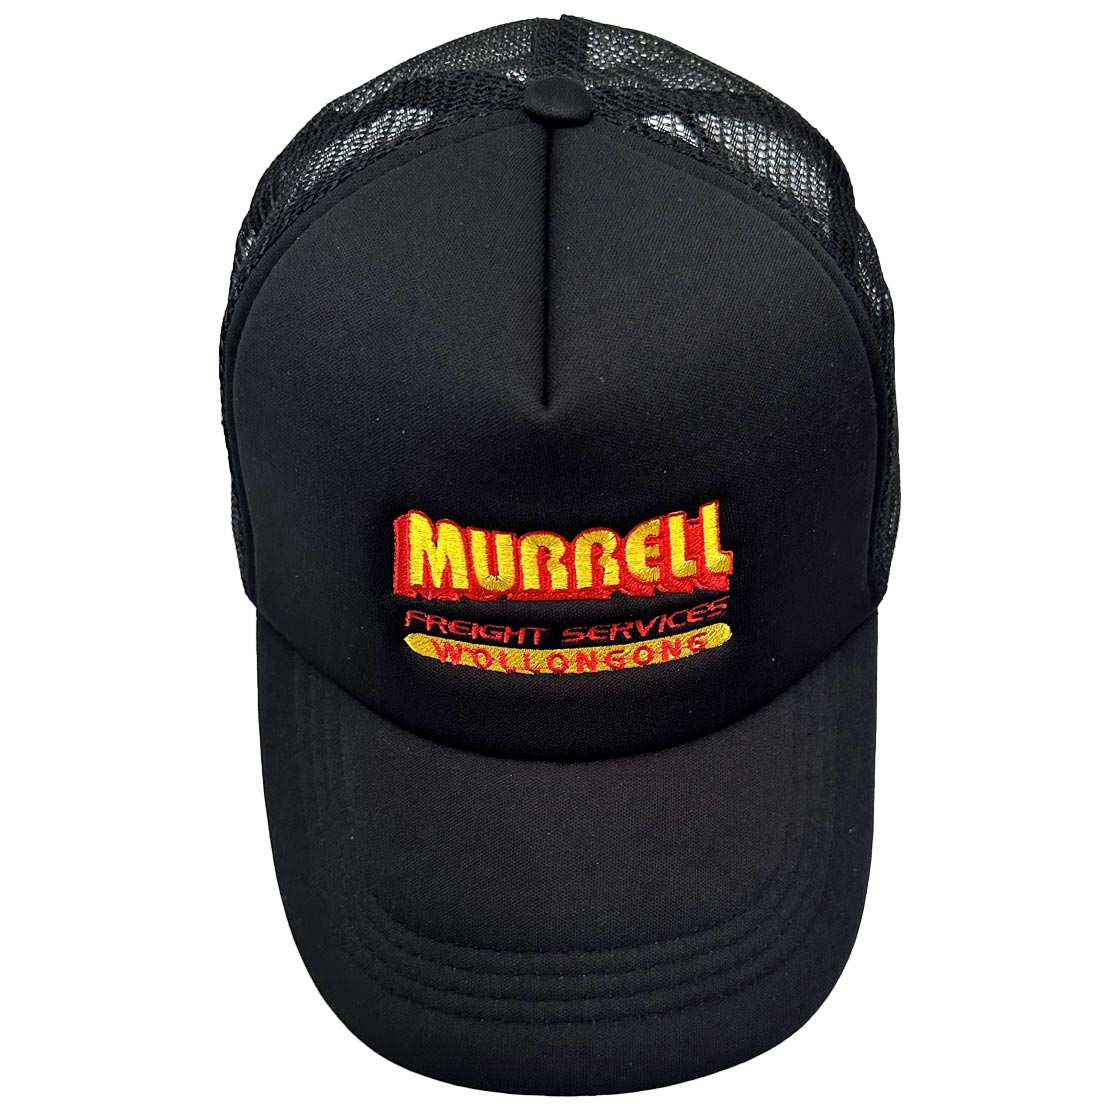 Murrell Truckers Cap